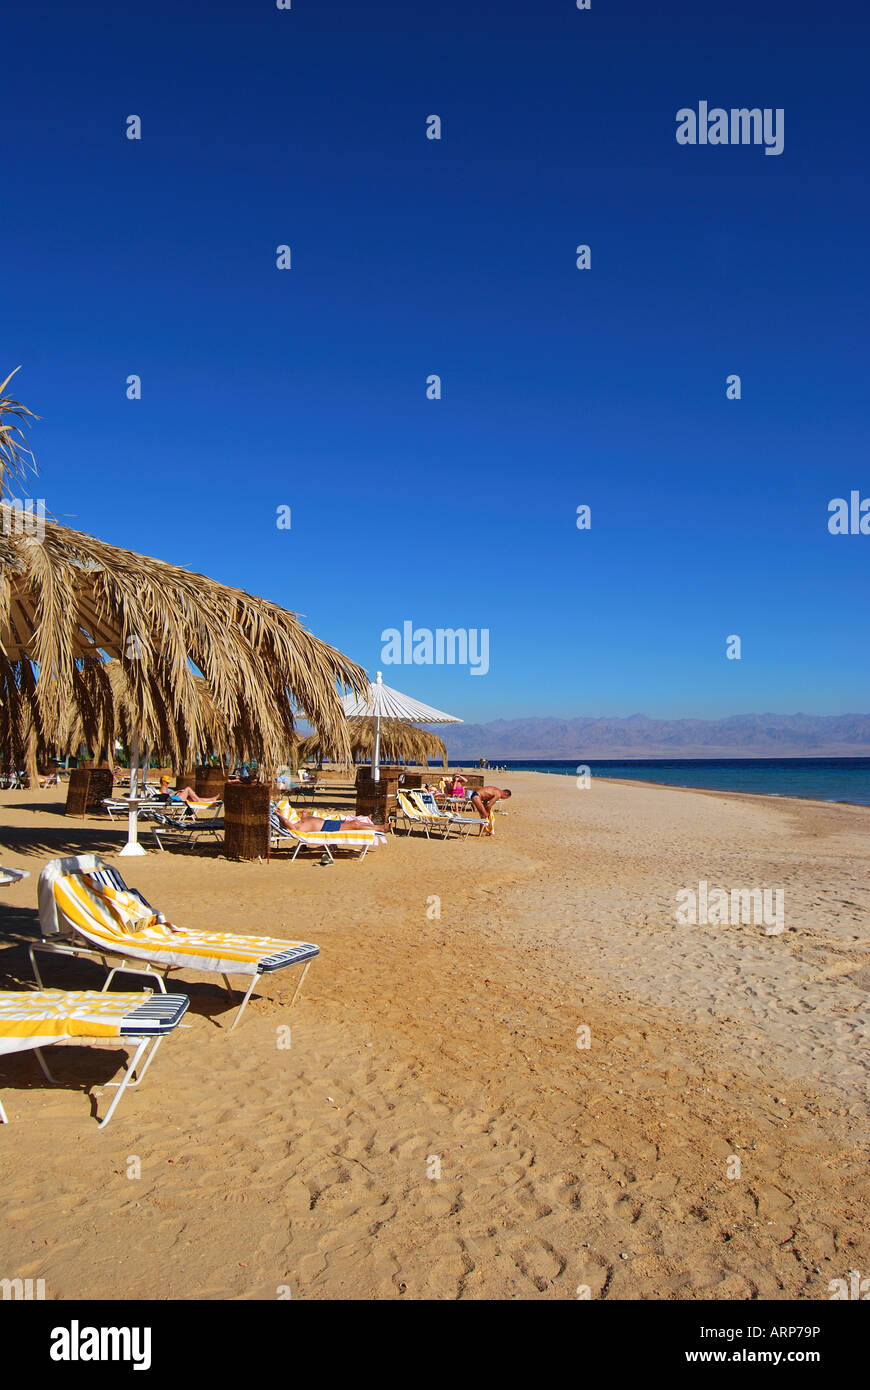 Hilton Nuweiba Coral Resort beach, Nuweiba, Sinai Peninsula, Republic ...